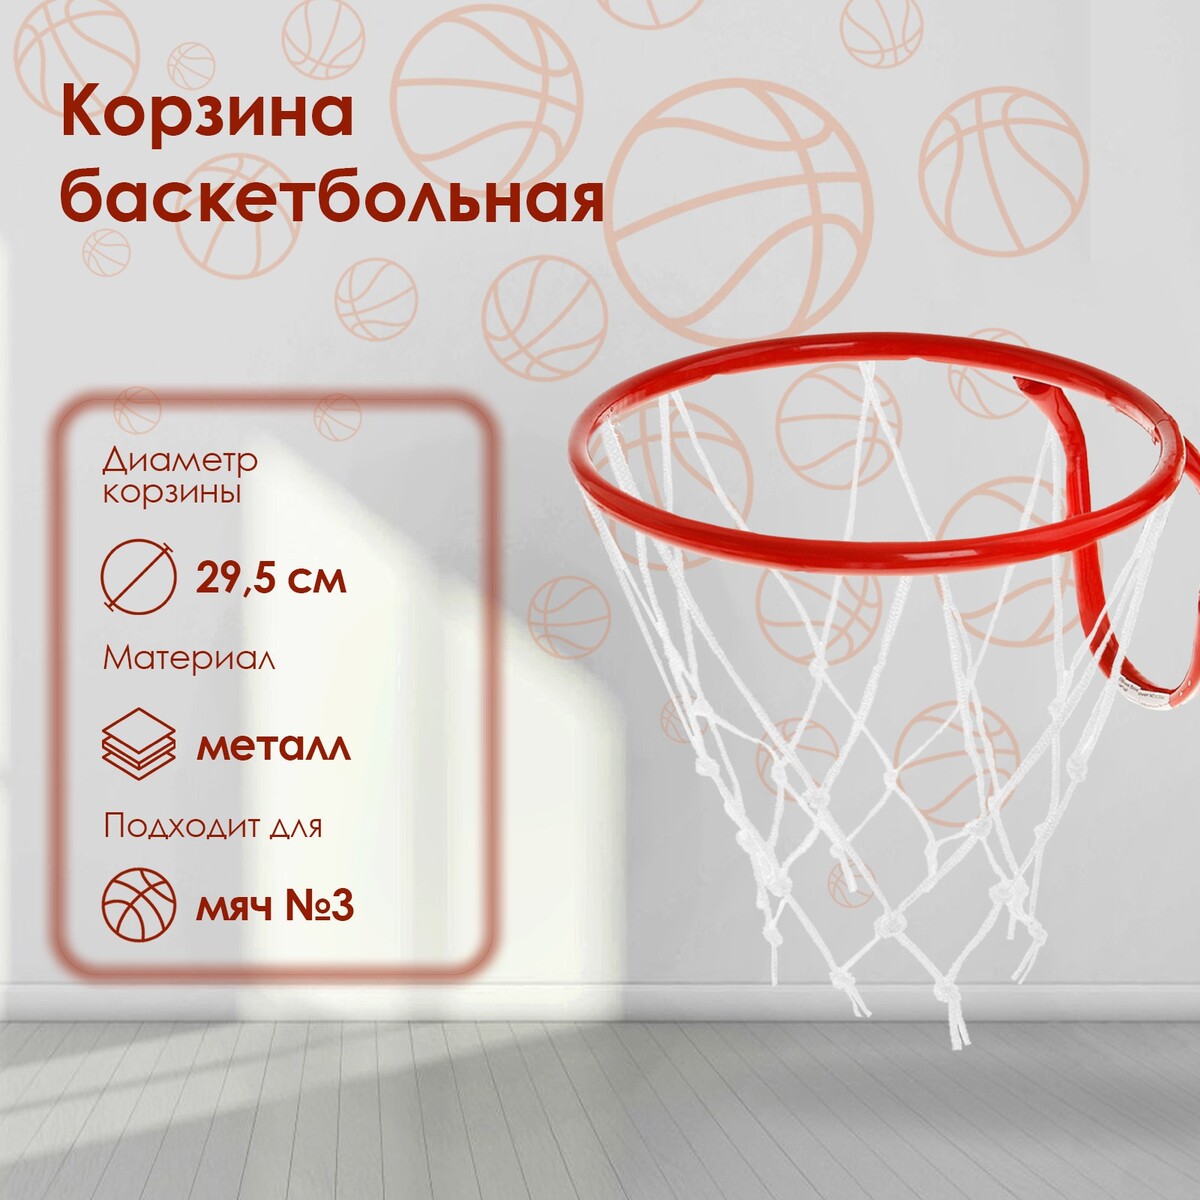 Корзина баскетбольная №3, d=295 мм, с сеткой No brand